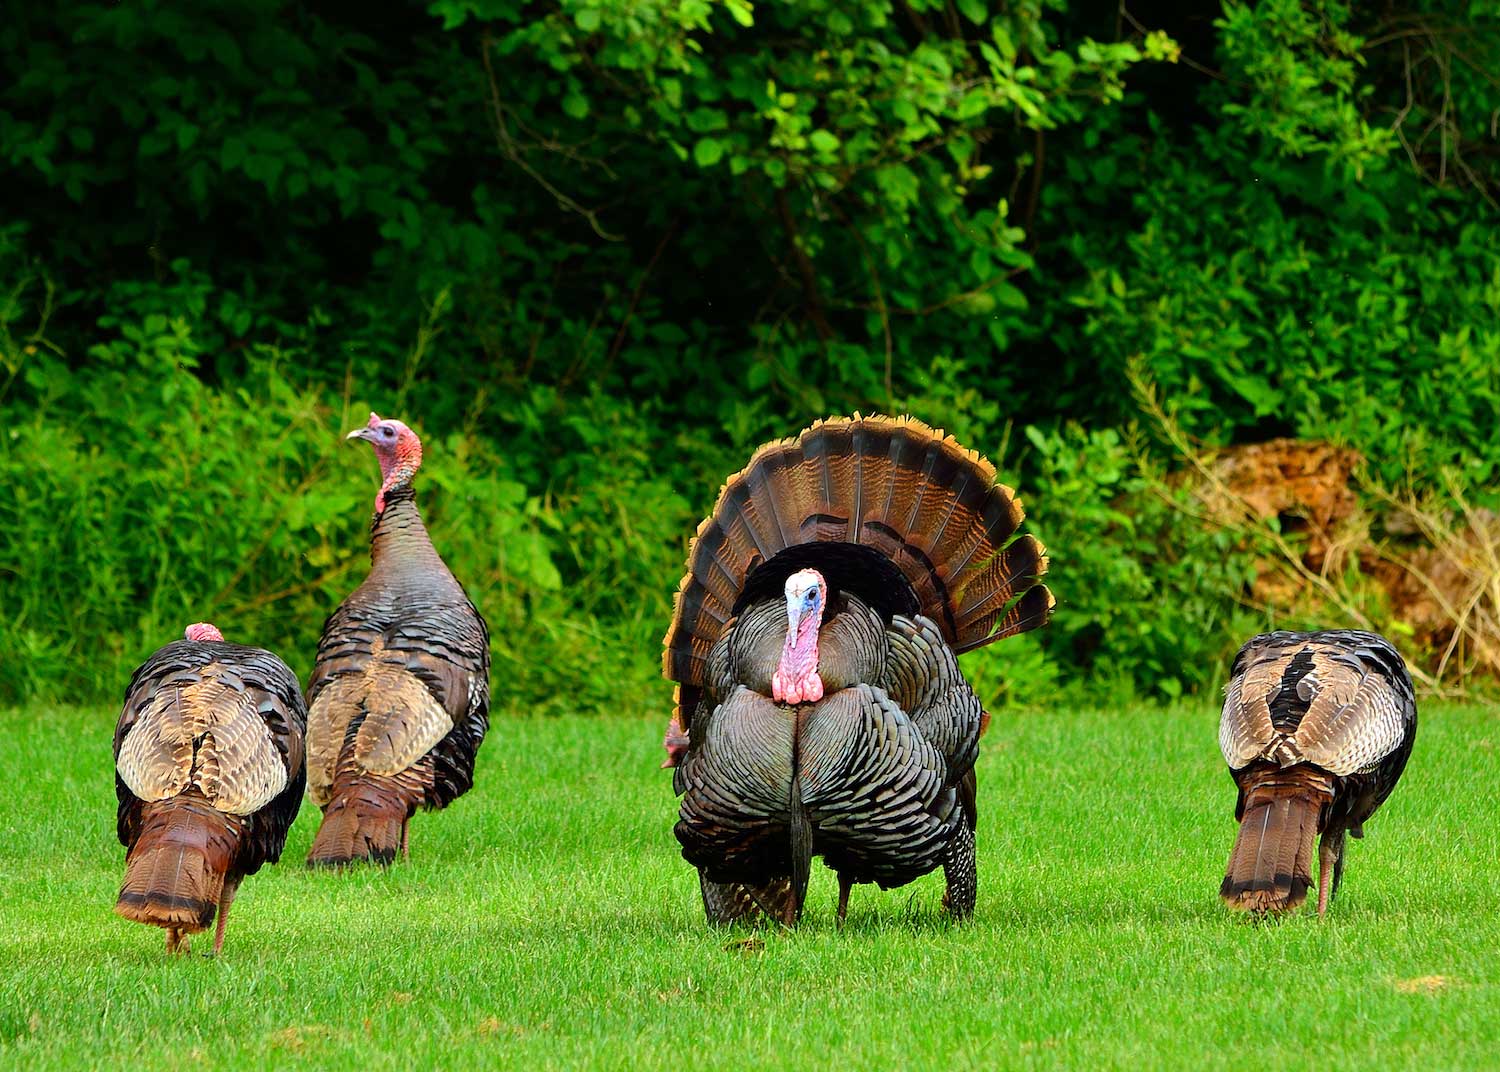 Wild-turkeys-on-grass-Shutterstock.jpg?w